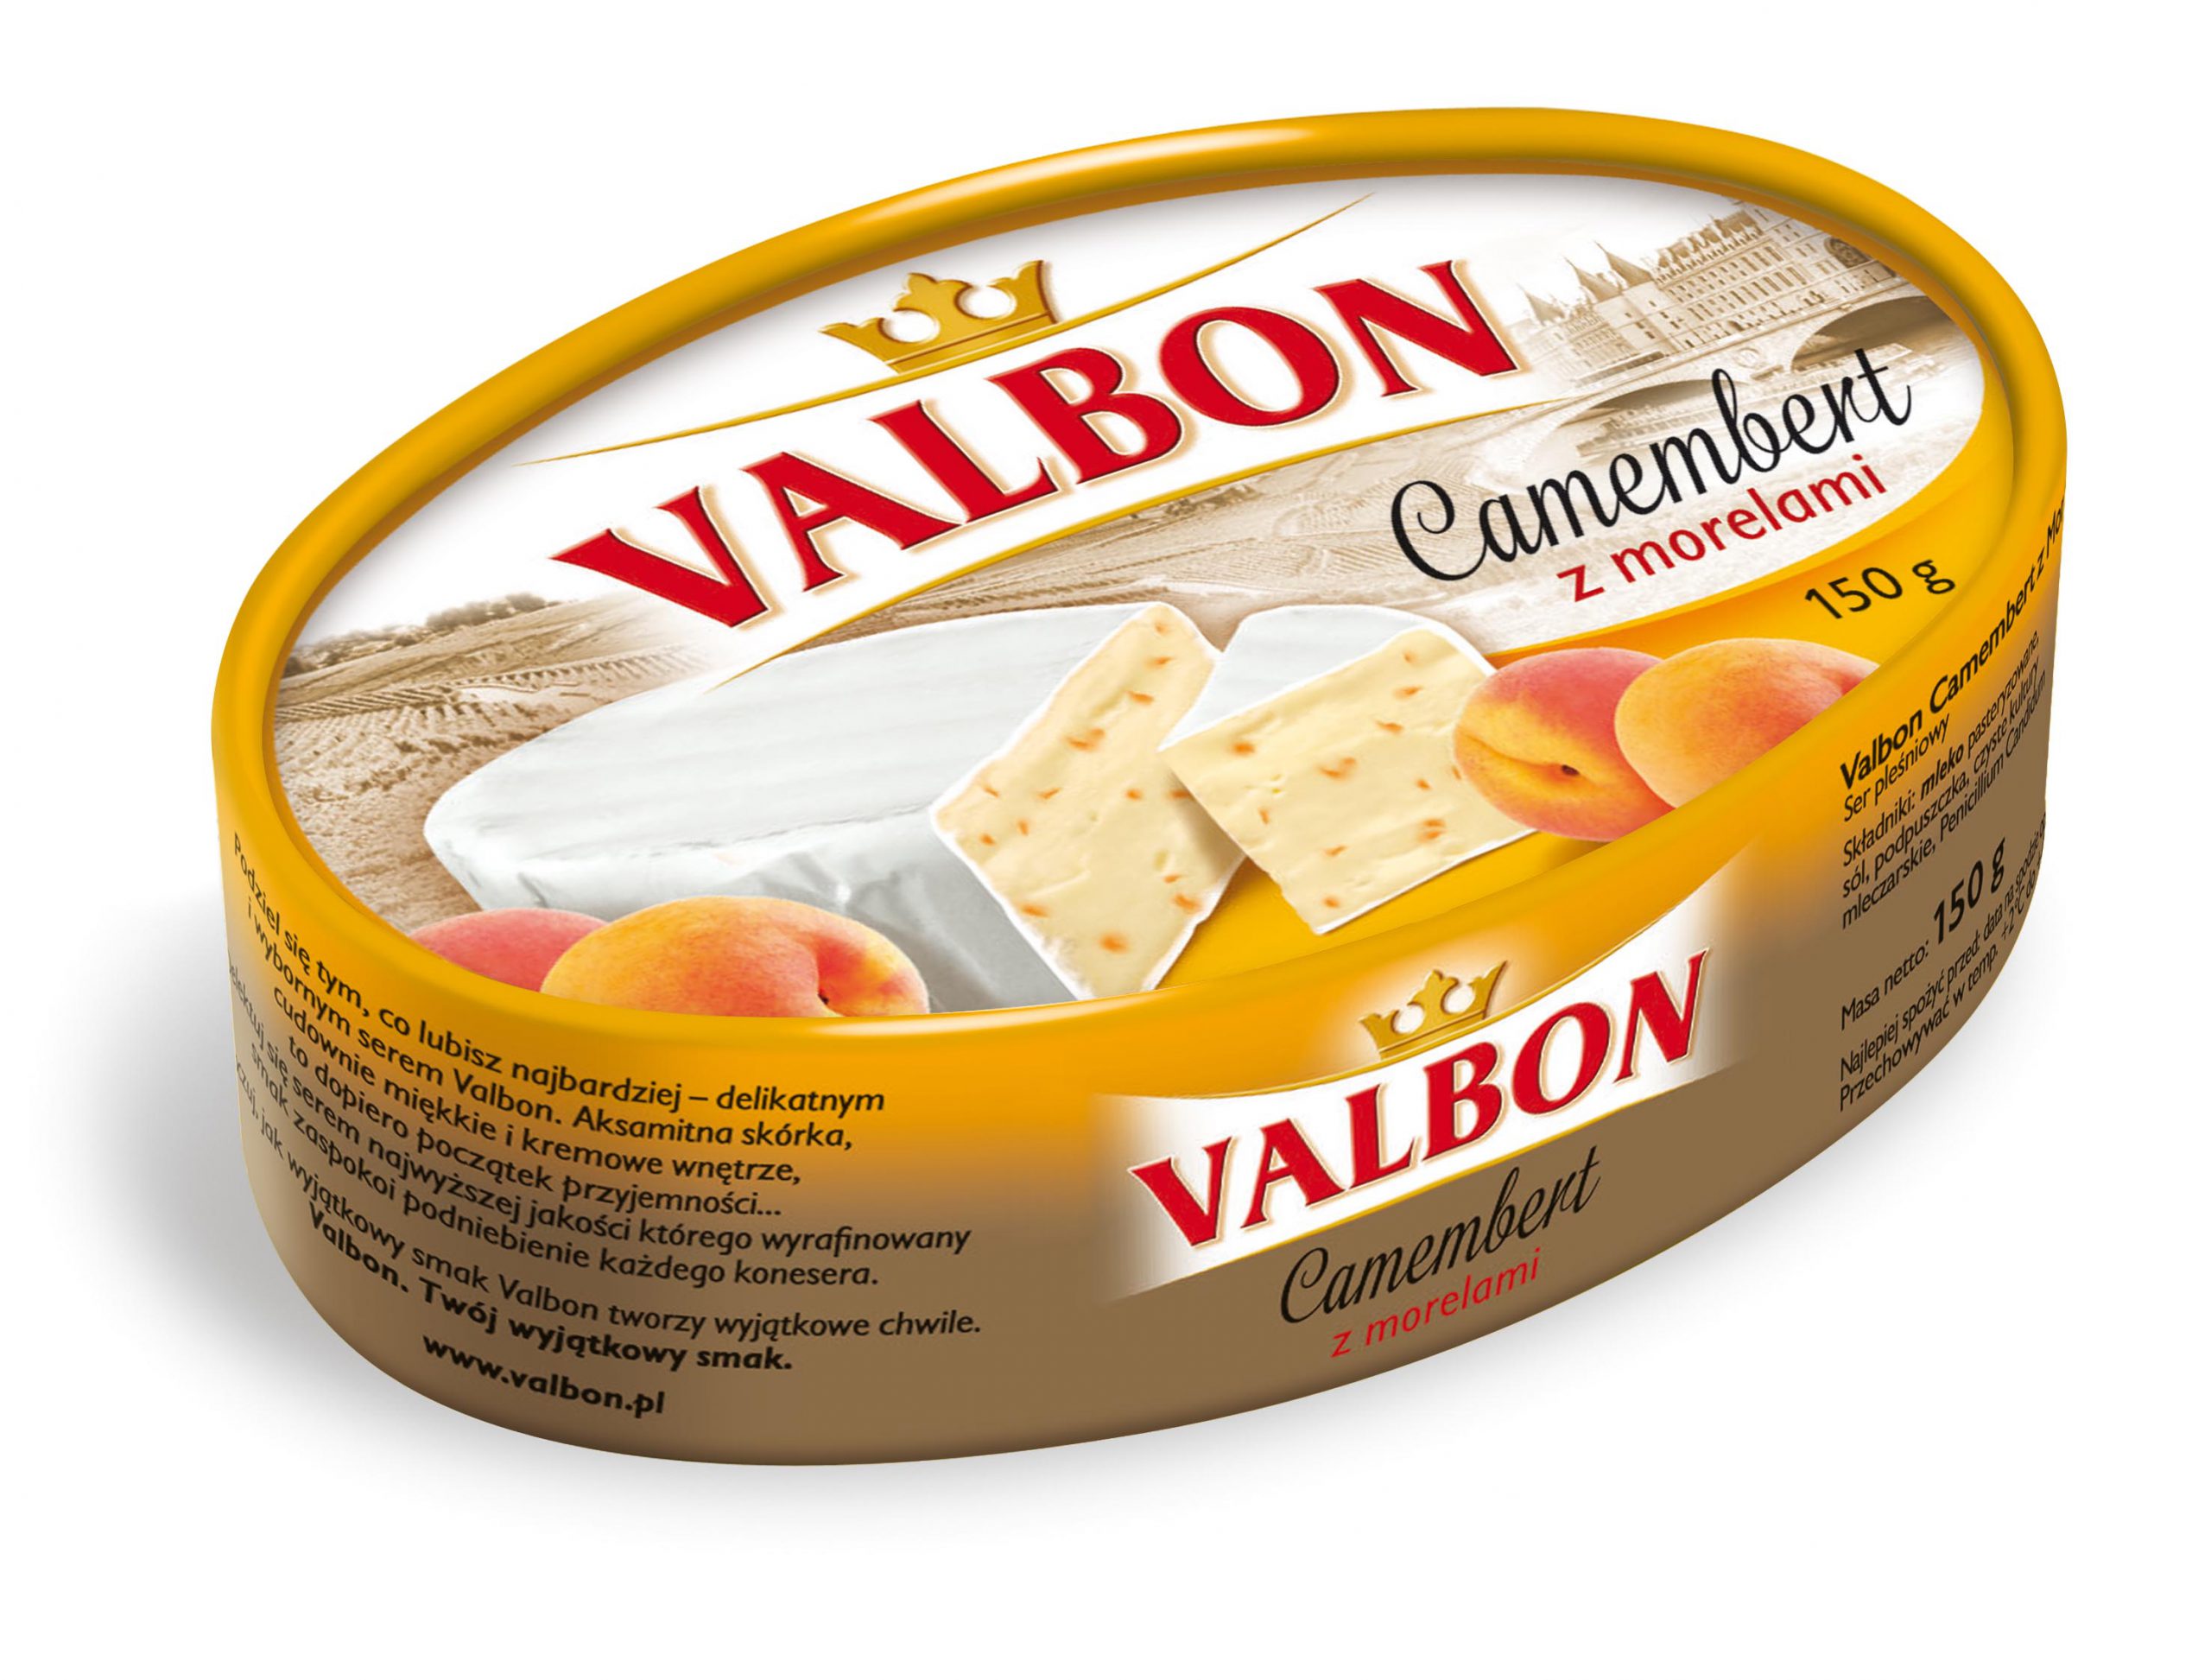 Sery Valbon Camembert z morelami